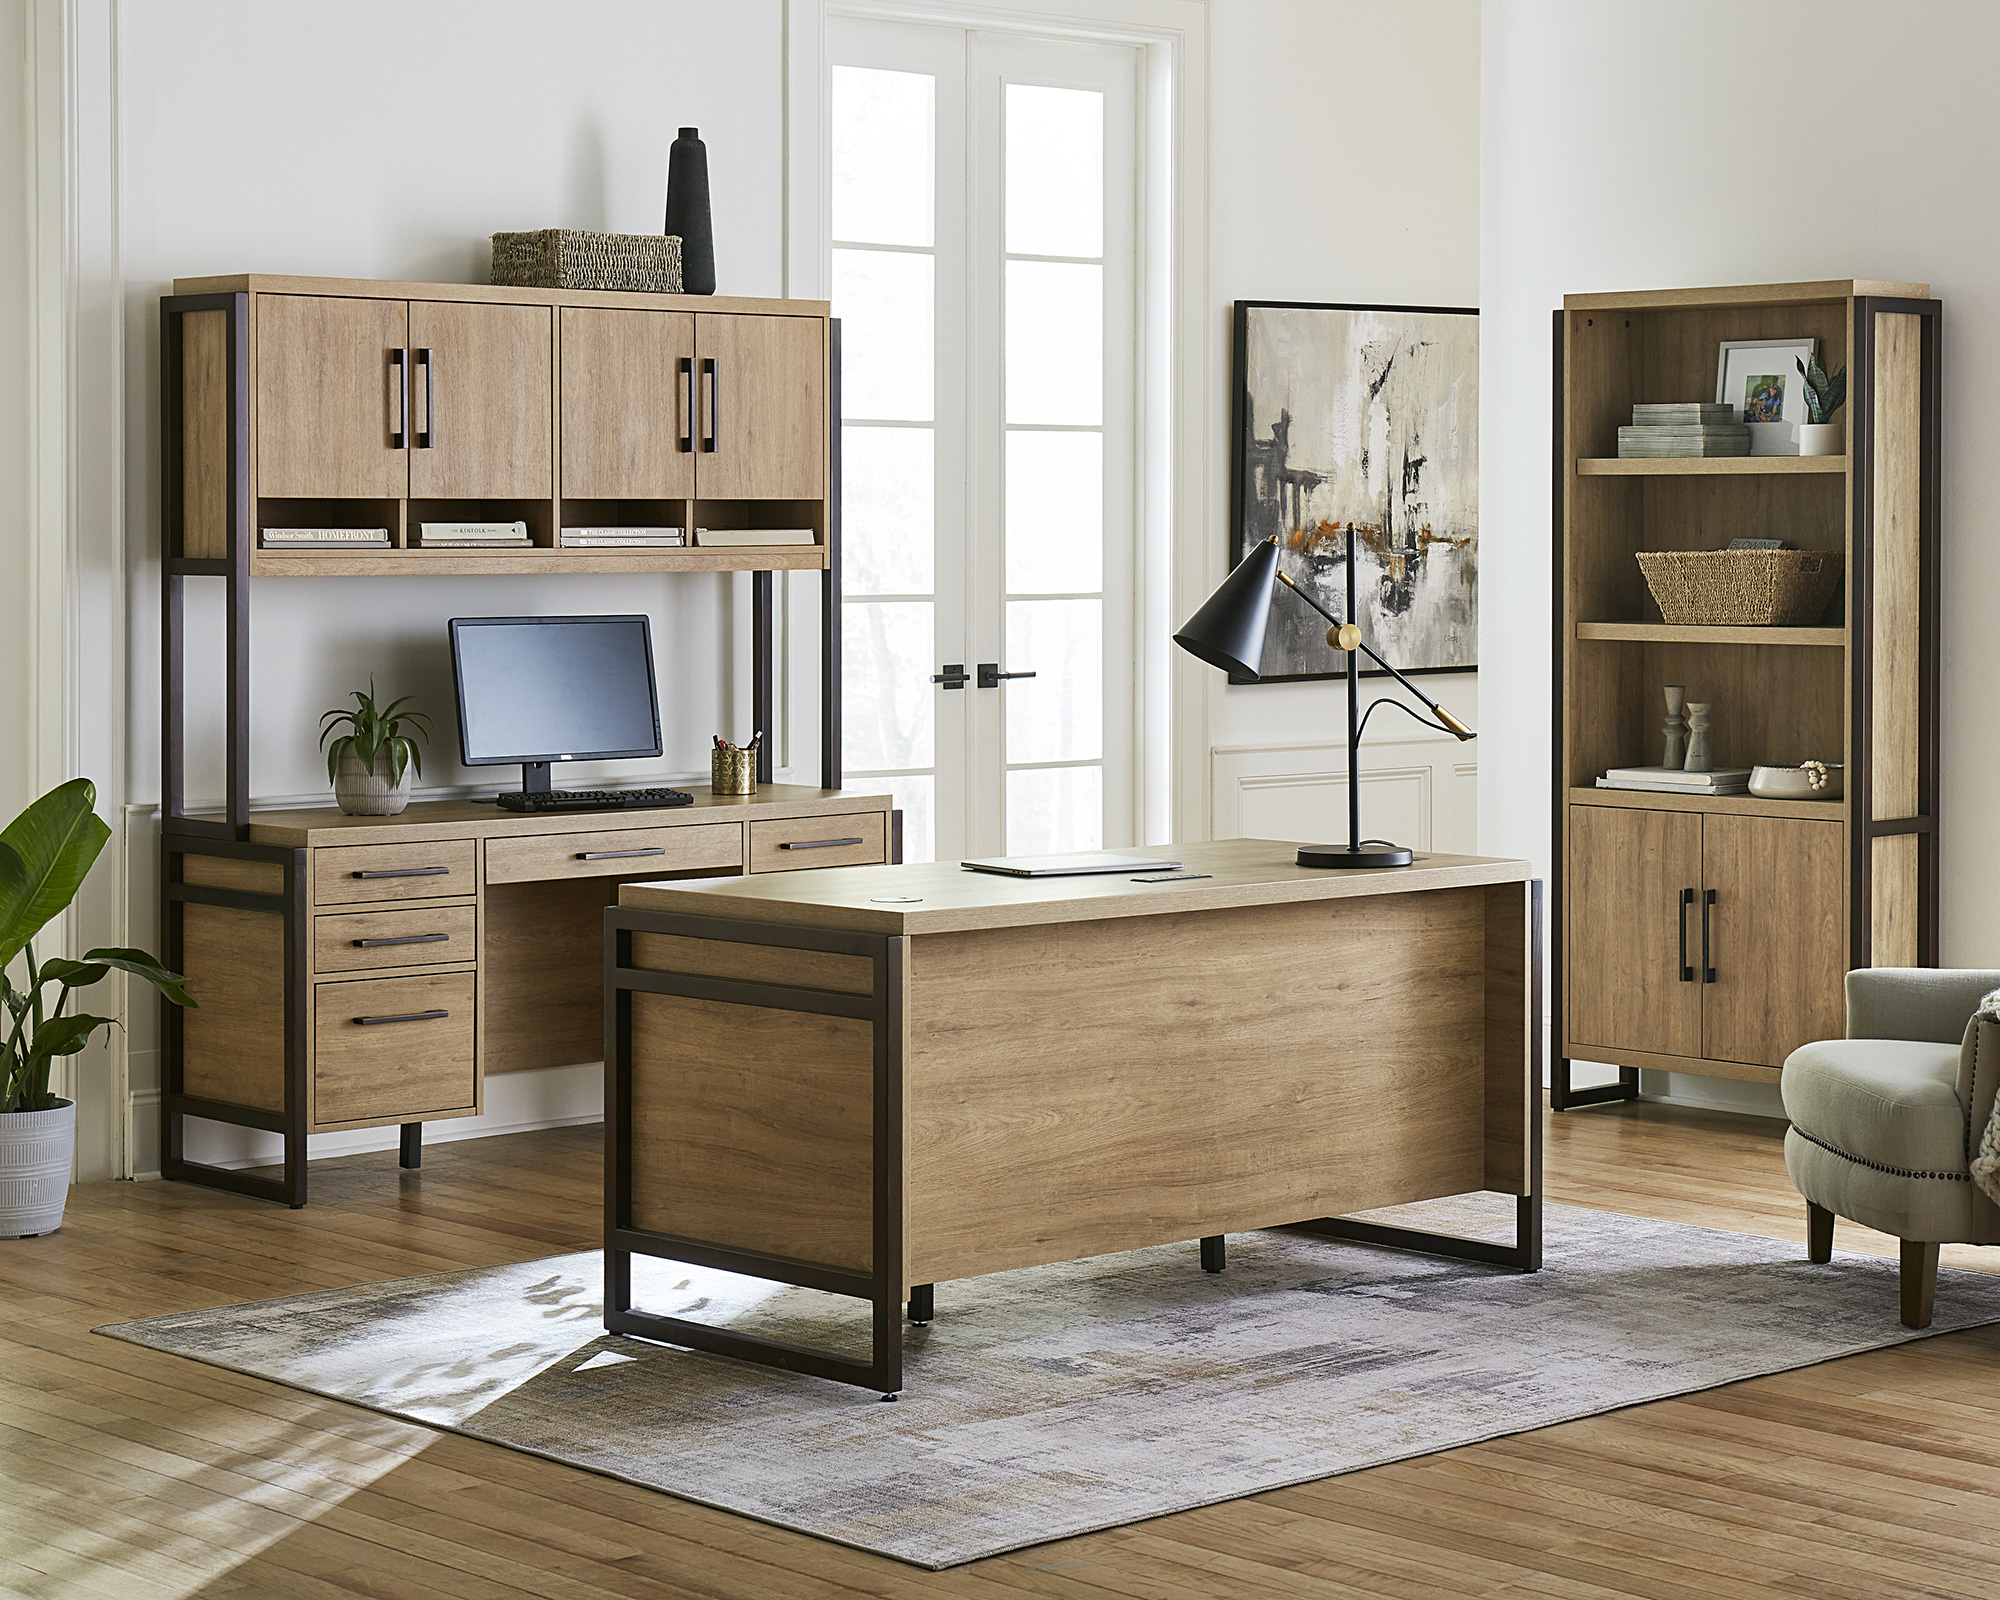 Martin Furniture Mason office collection in Monarca finish